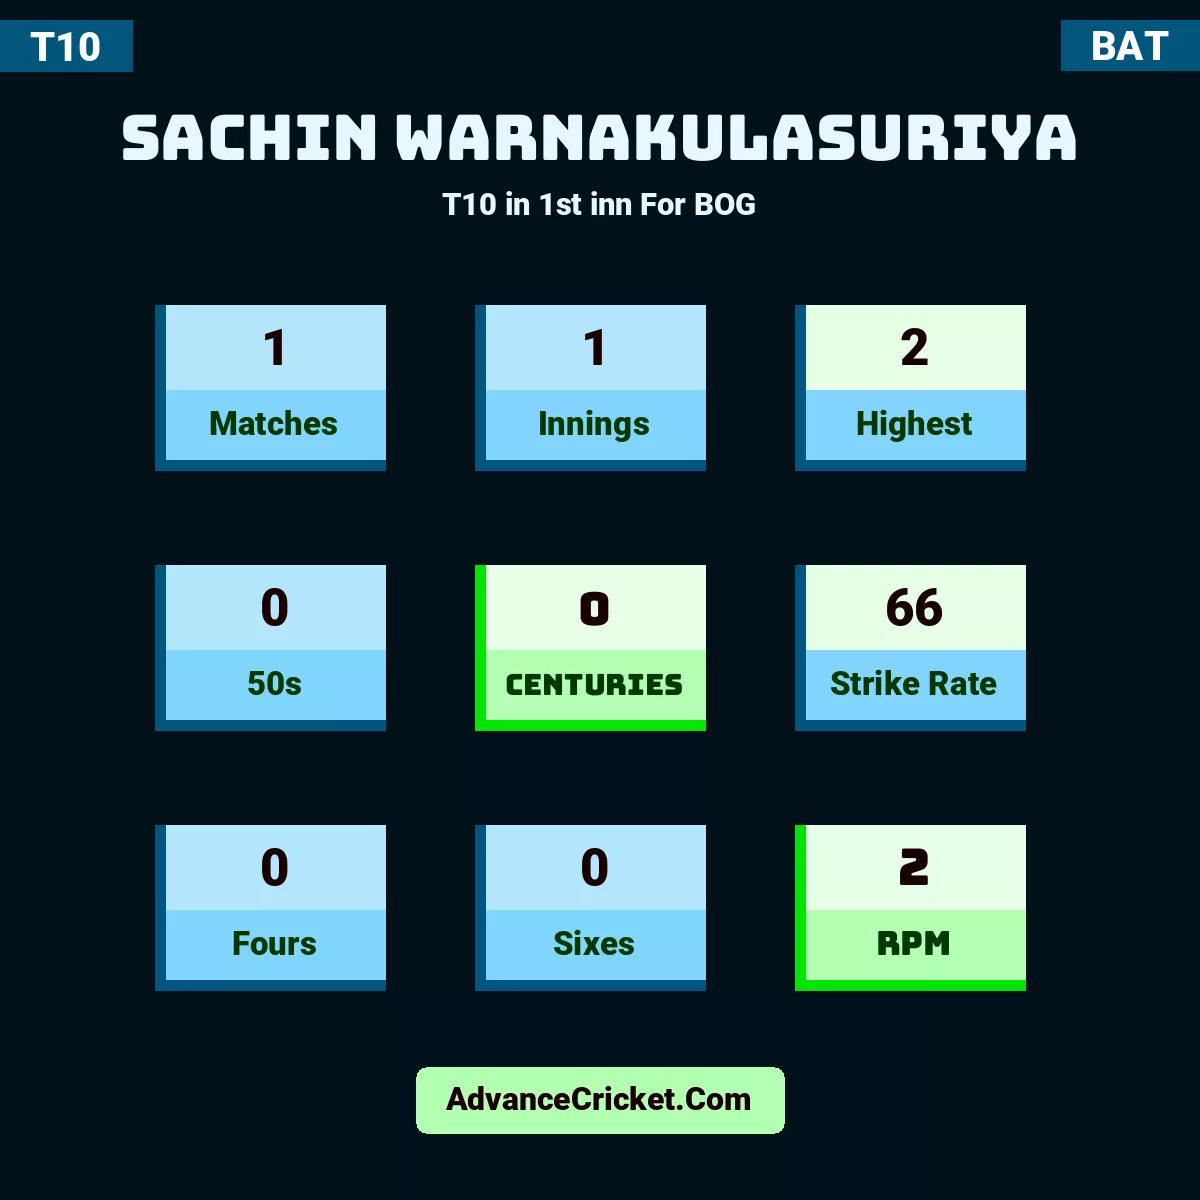 Sachin Warnakulasuriya T10  in 1st inn For BOG, Sachin Warnakulasuriya played 1 matches, scored 2 runs as highest, 0 half-centuries, and 0 centuries, with a strike rate of 66. S.Warnakulasuriya hit 0 fours and 0 sixes, with an RPM of 2.